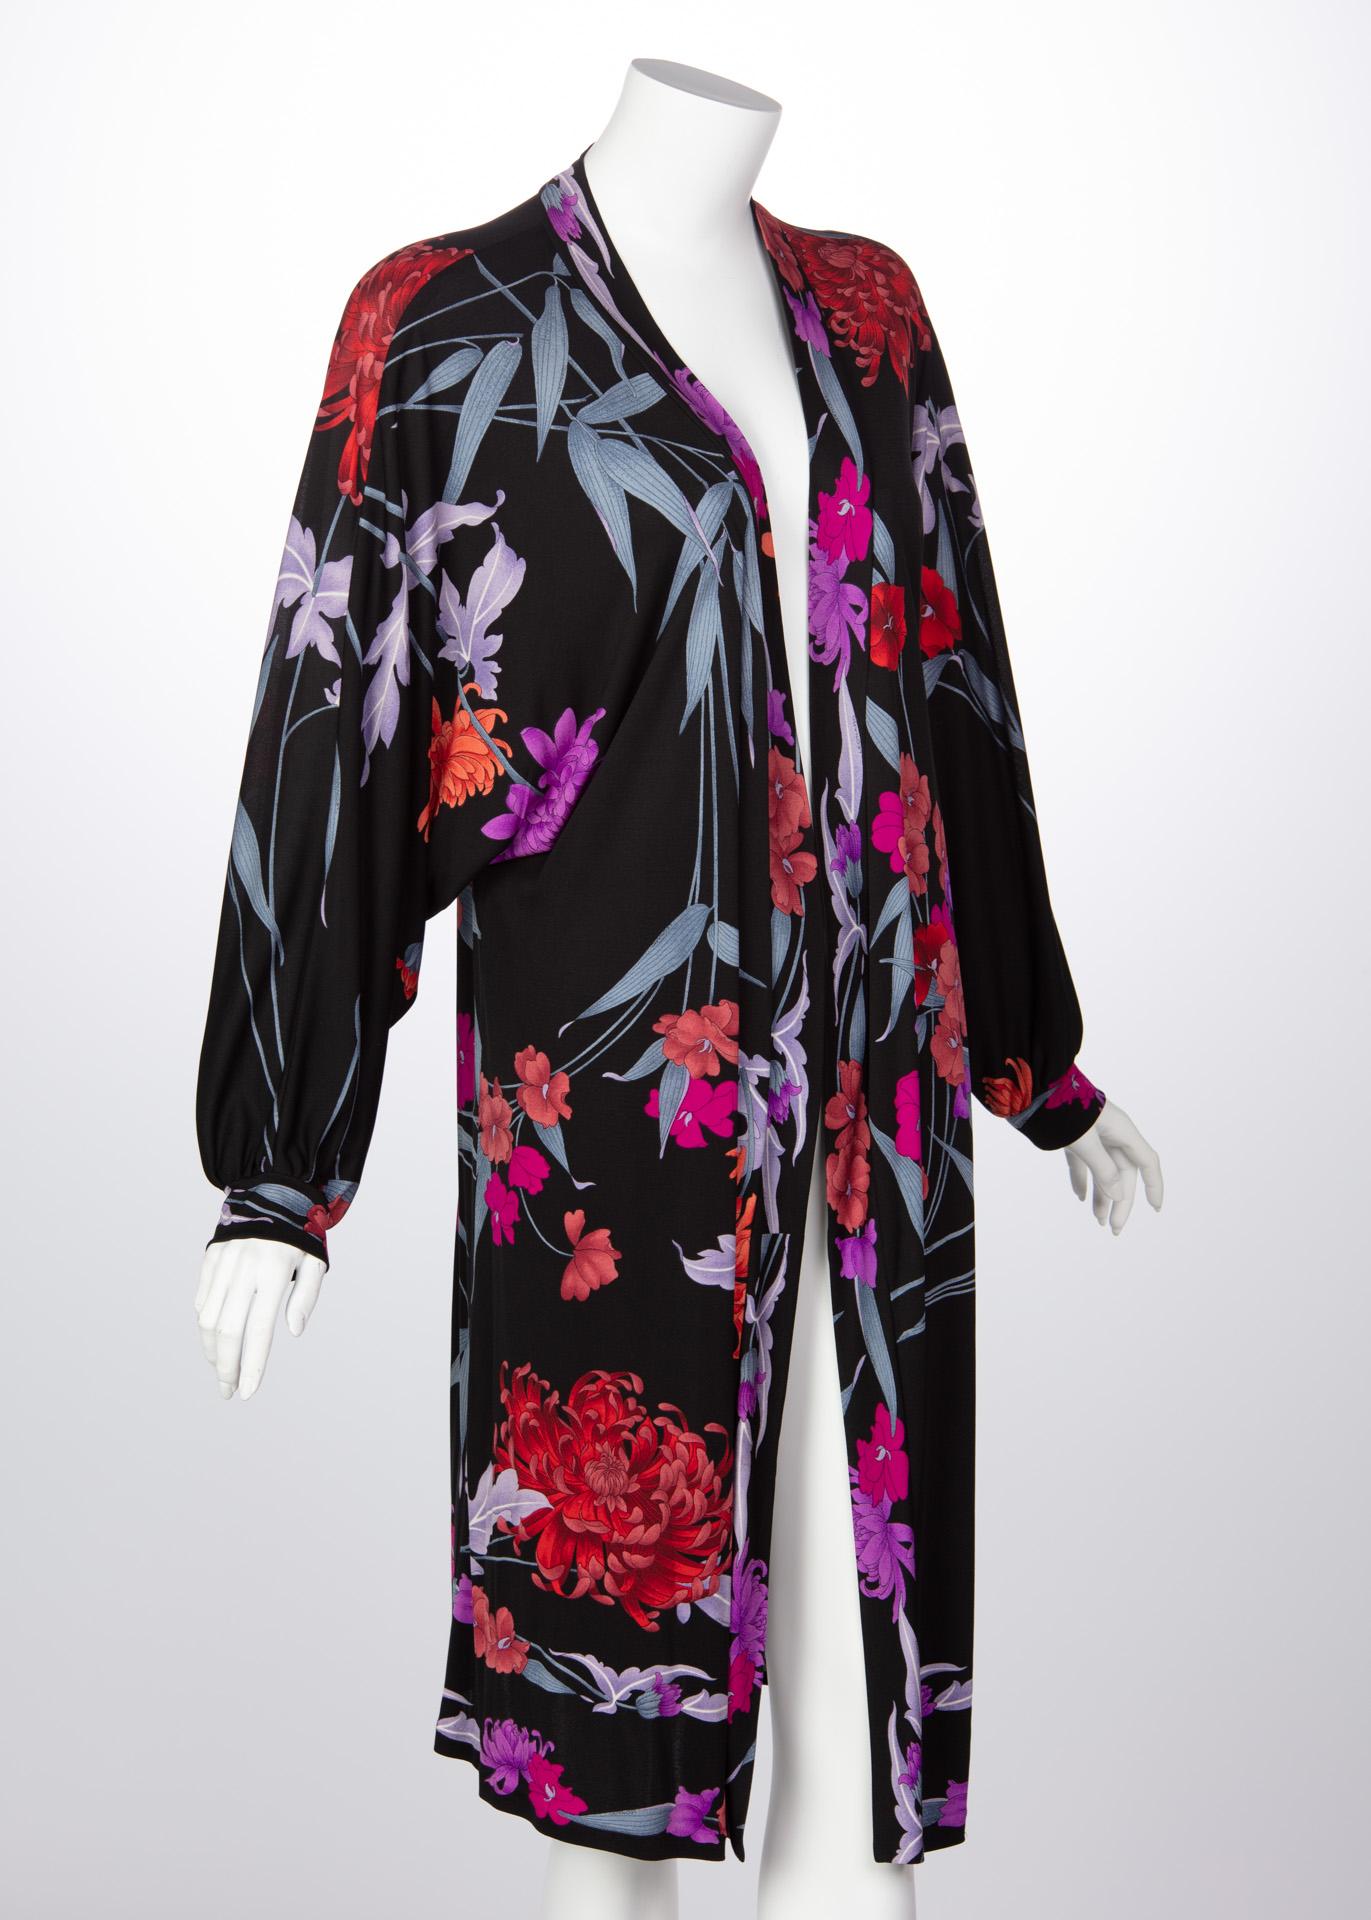 1970s Leonard Paris Floral Silk Jersey Dress Jacket In Excellent Condition For Sale In Boca Raton, FL